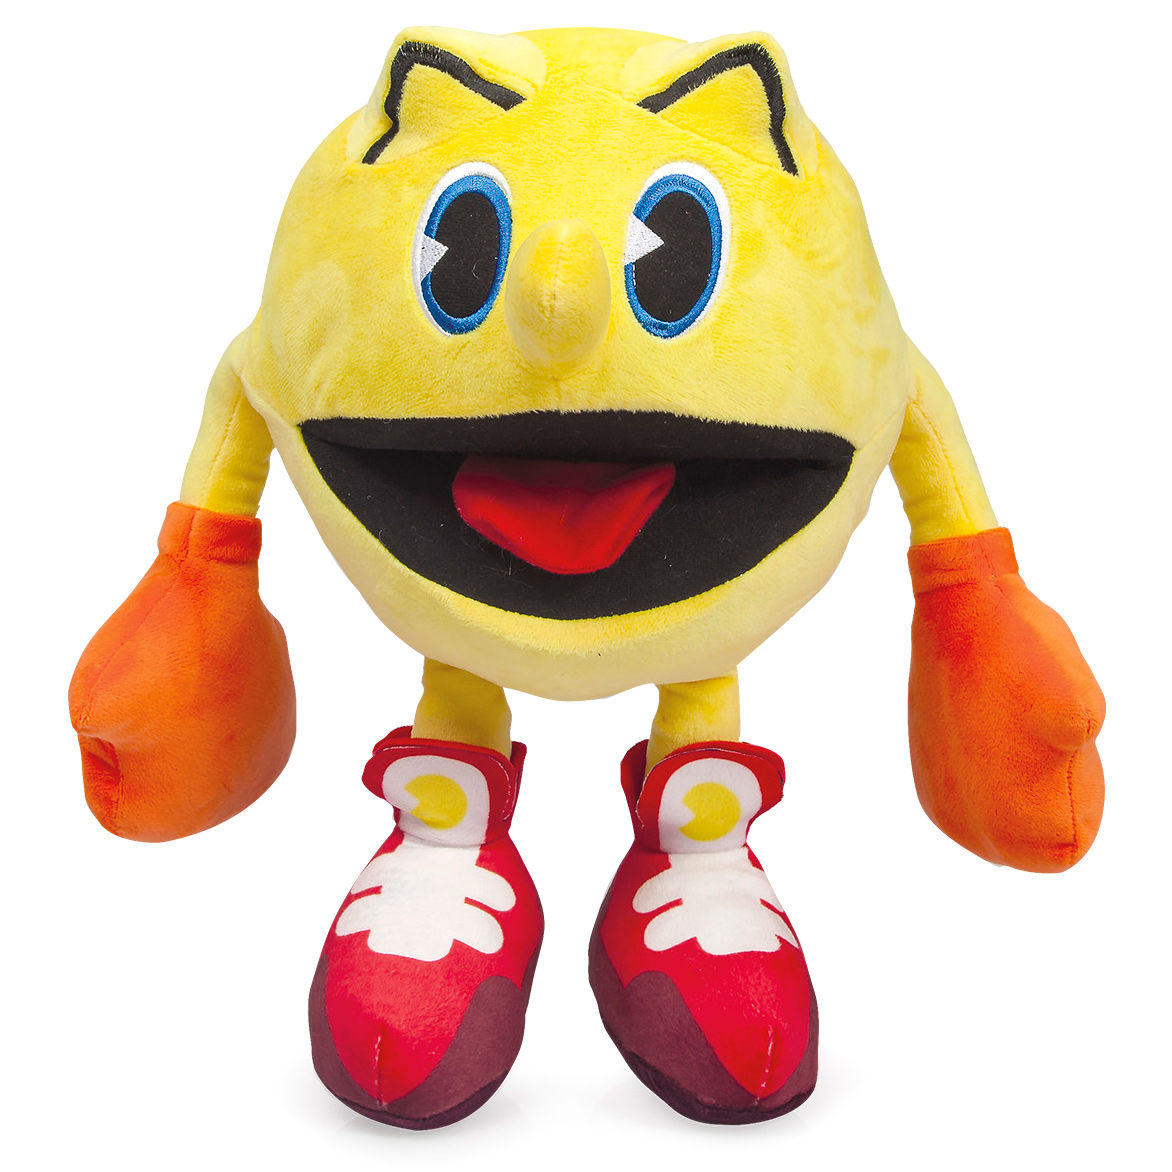 Toy 30. Pacman мягкая игрушка. Большая мягкая игрушка Pac-man. Игрушка Pac-man мягкая за ₽30. Мягкая игрушка Pac-man высотой больше метра.